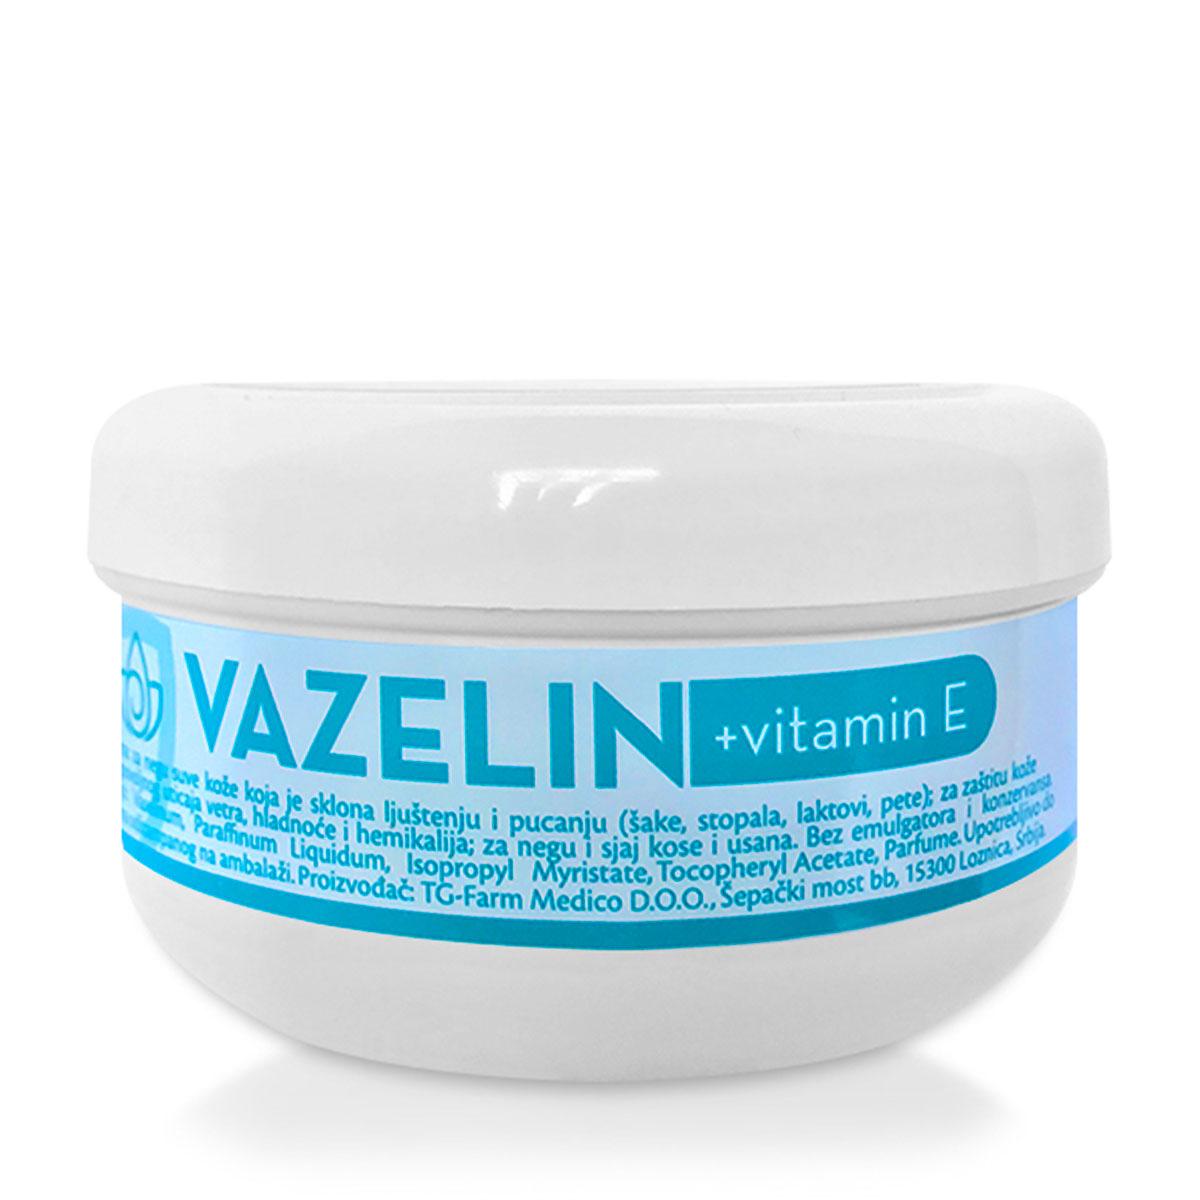 TG-FARM MEDICO Vazelin + Vitamin E krema 200 ml